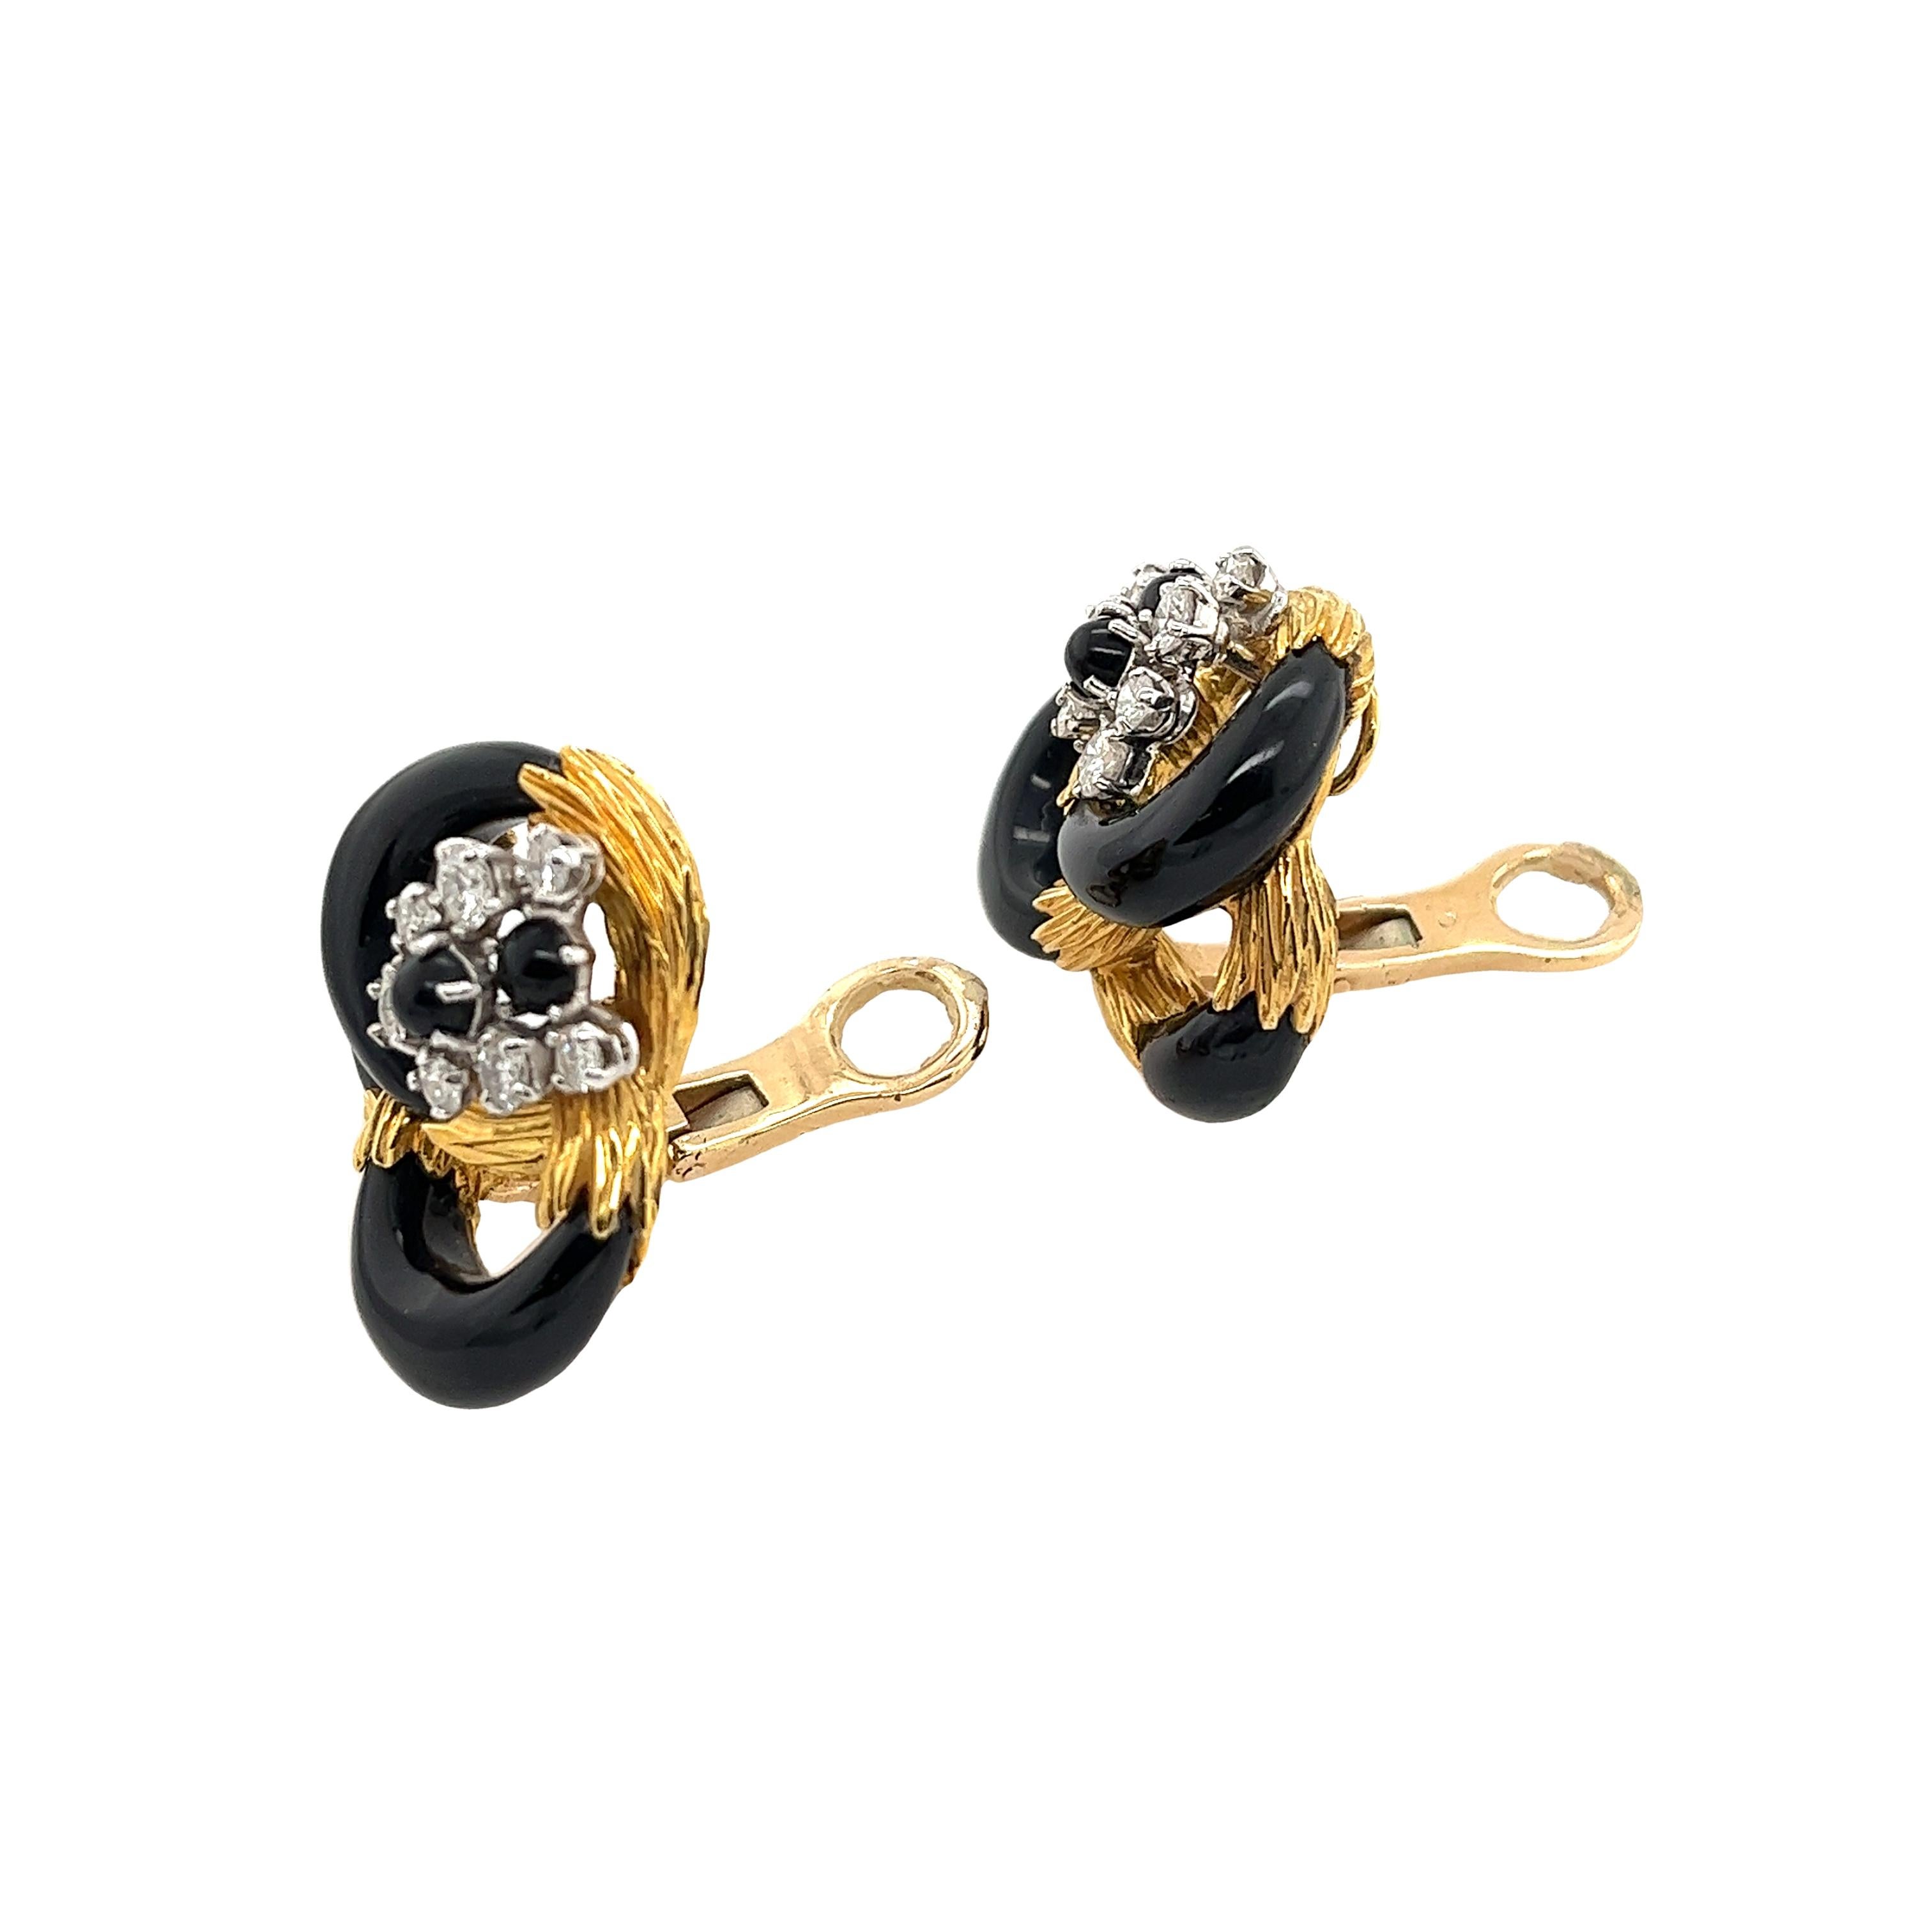 Kutchinsky Vintage Diamond Earrings Black Enamel Set In 18ct Yellow Gold For Sale 2